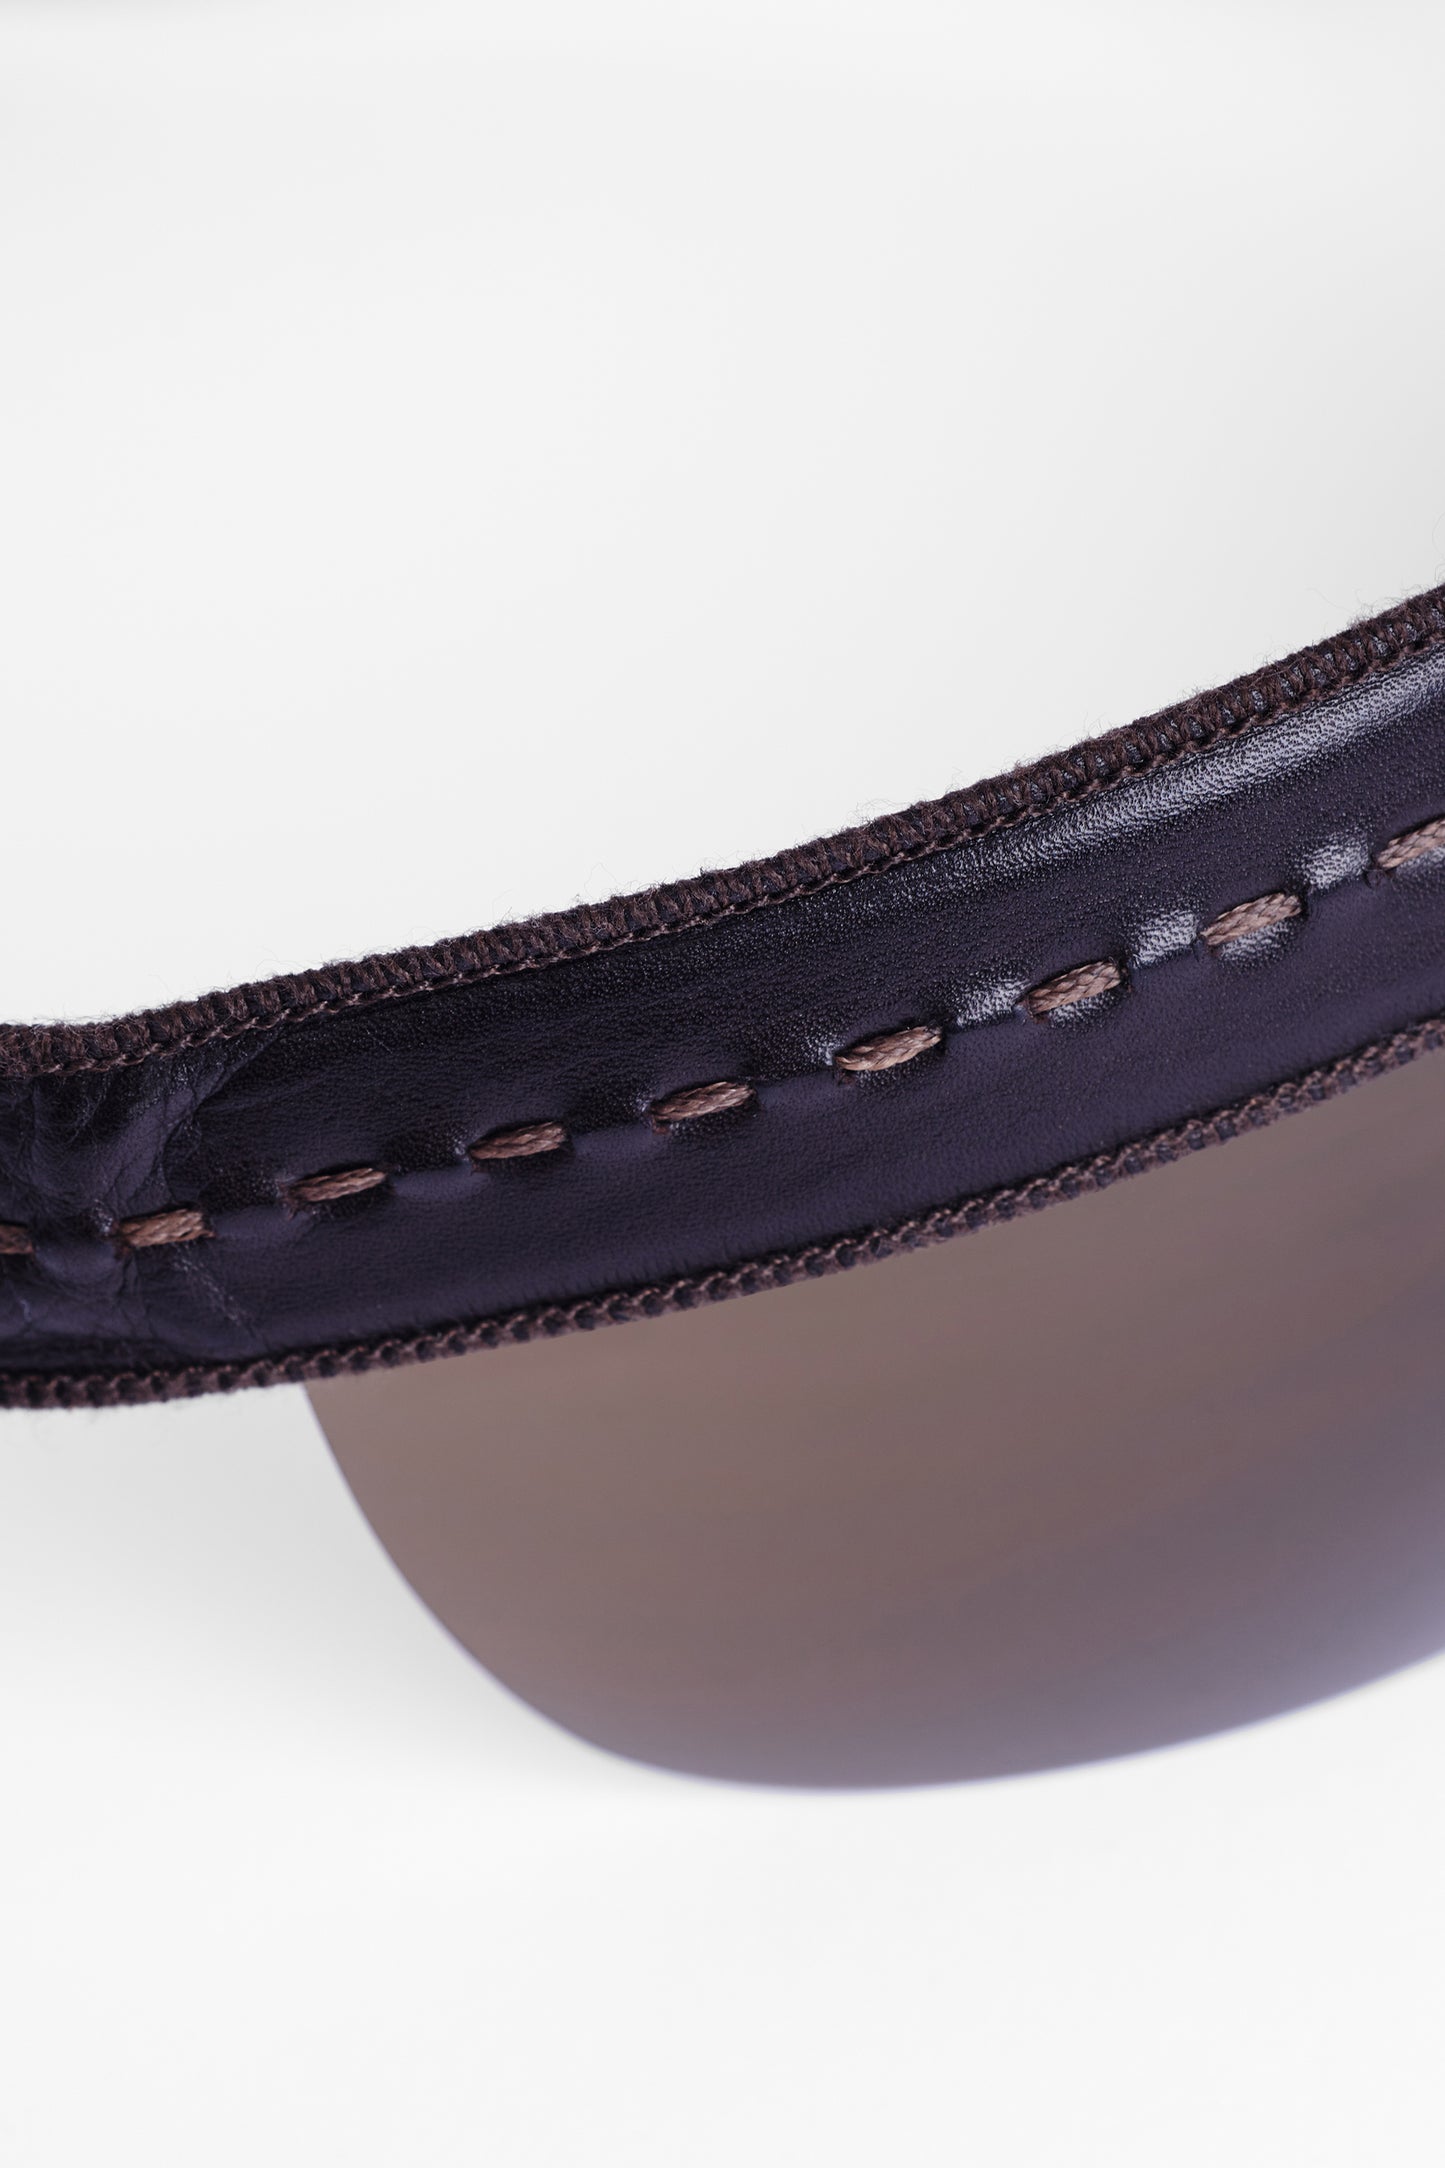 1990's Brown Leather Tassel Shield Sunglasses